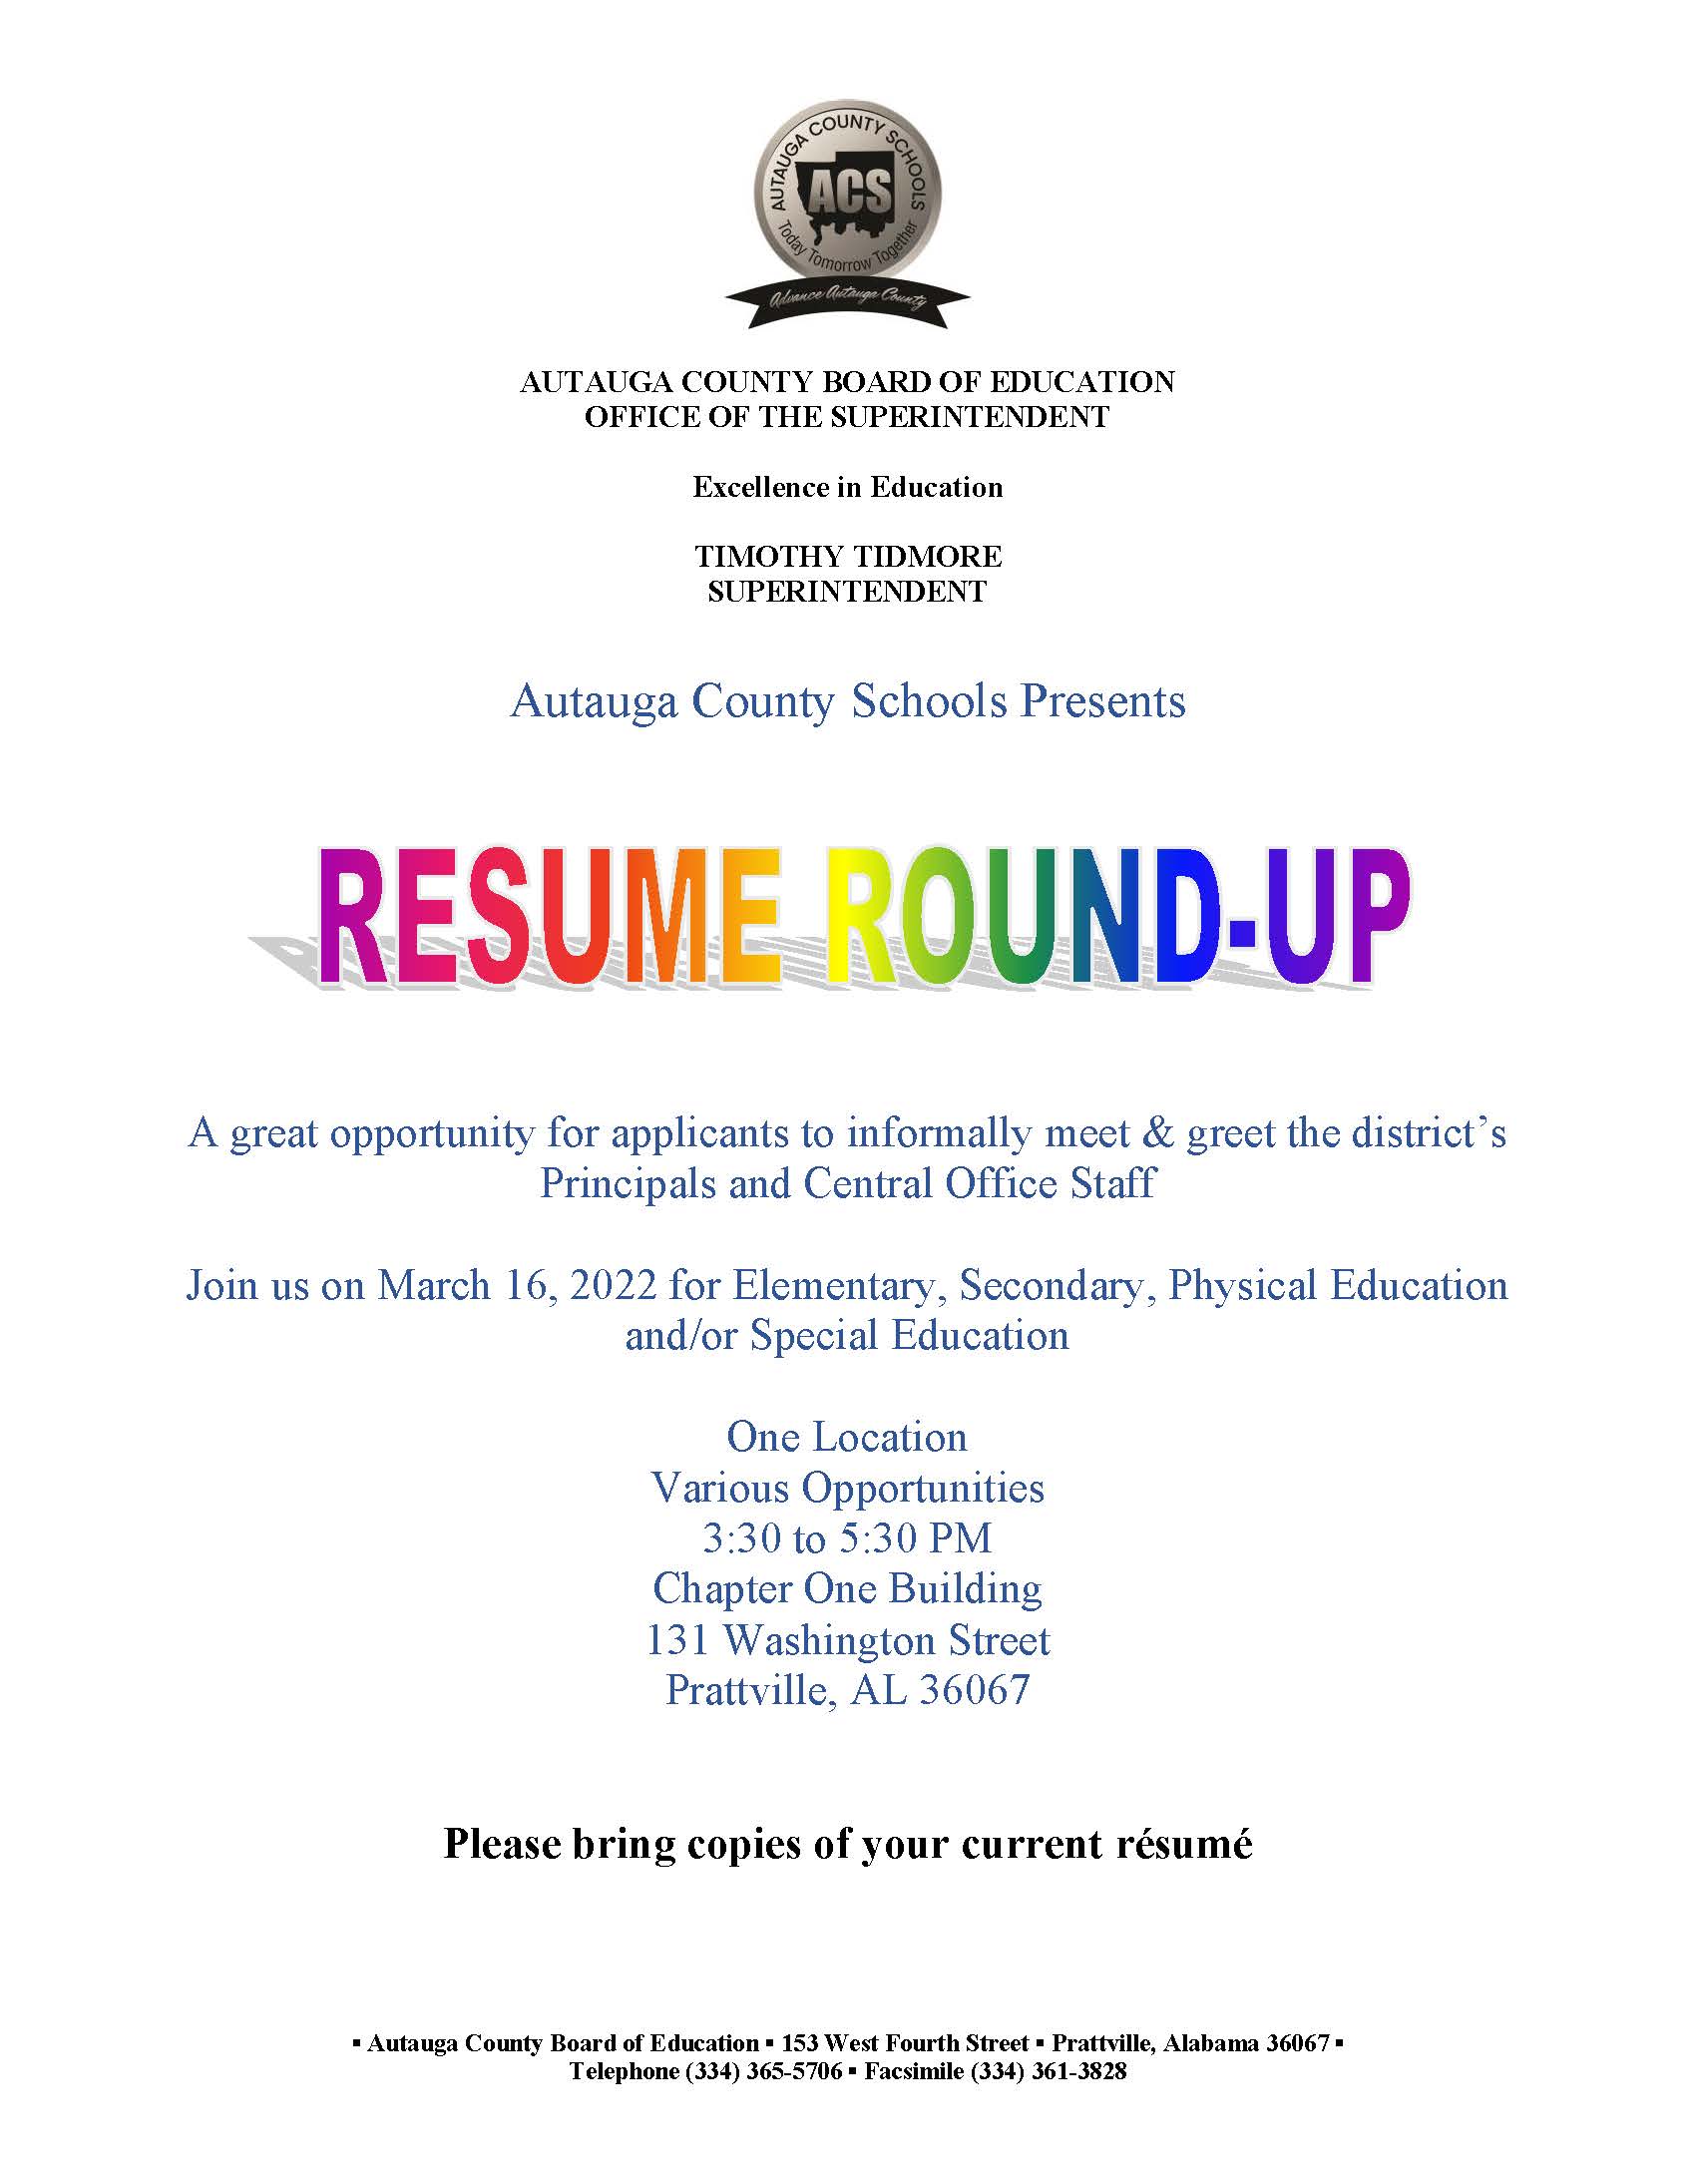 Resume Round-up March 16, 2022 3:30-5:30 p.m. Chapter One Building 131 Washington Street Prattville, AL 